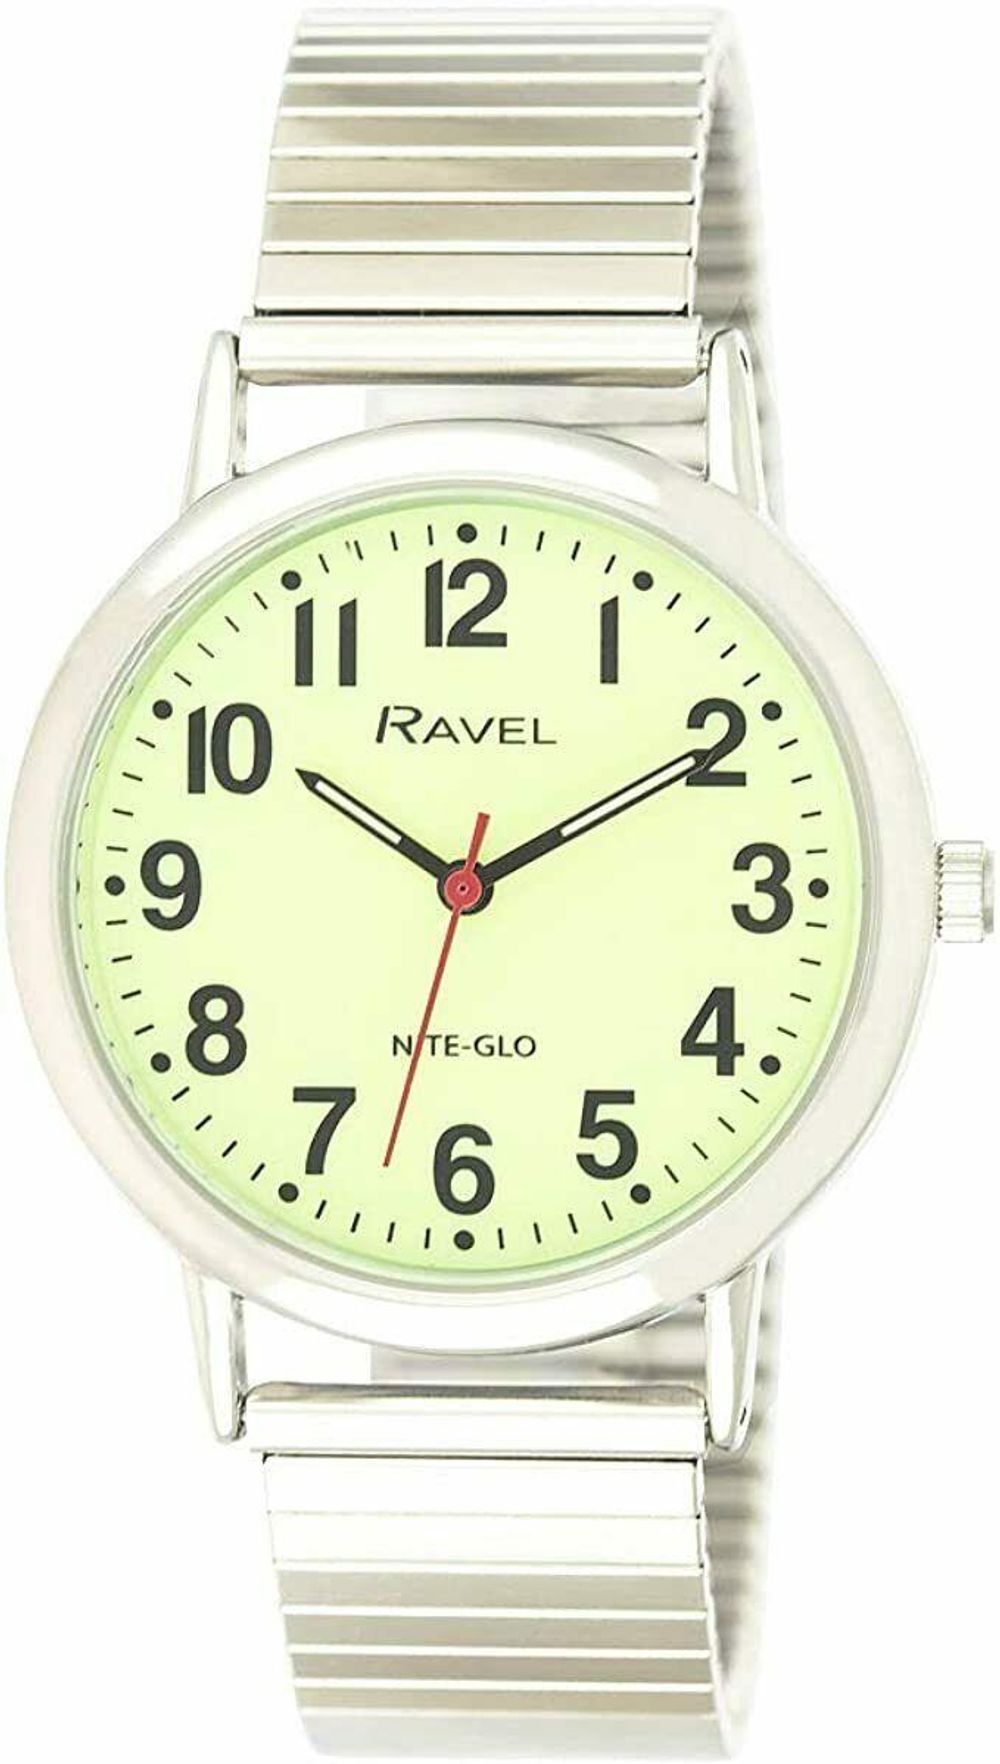 Ravel Glow in The Dark Luminous Dial Watch - Stainless Steel Expander Bracelet